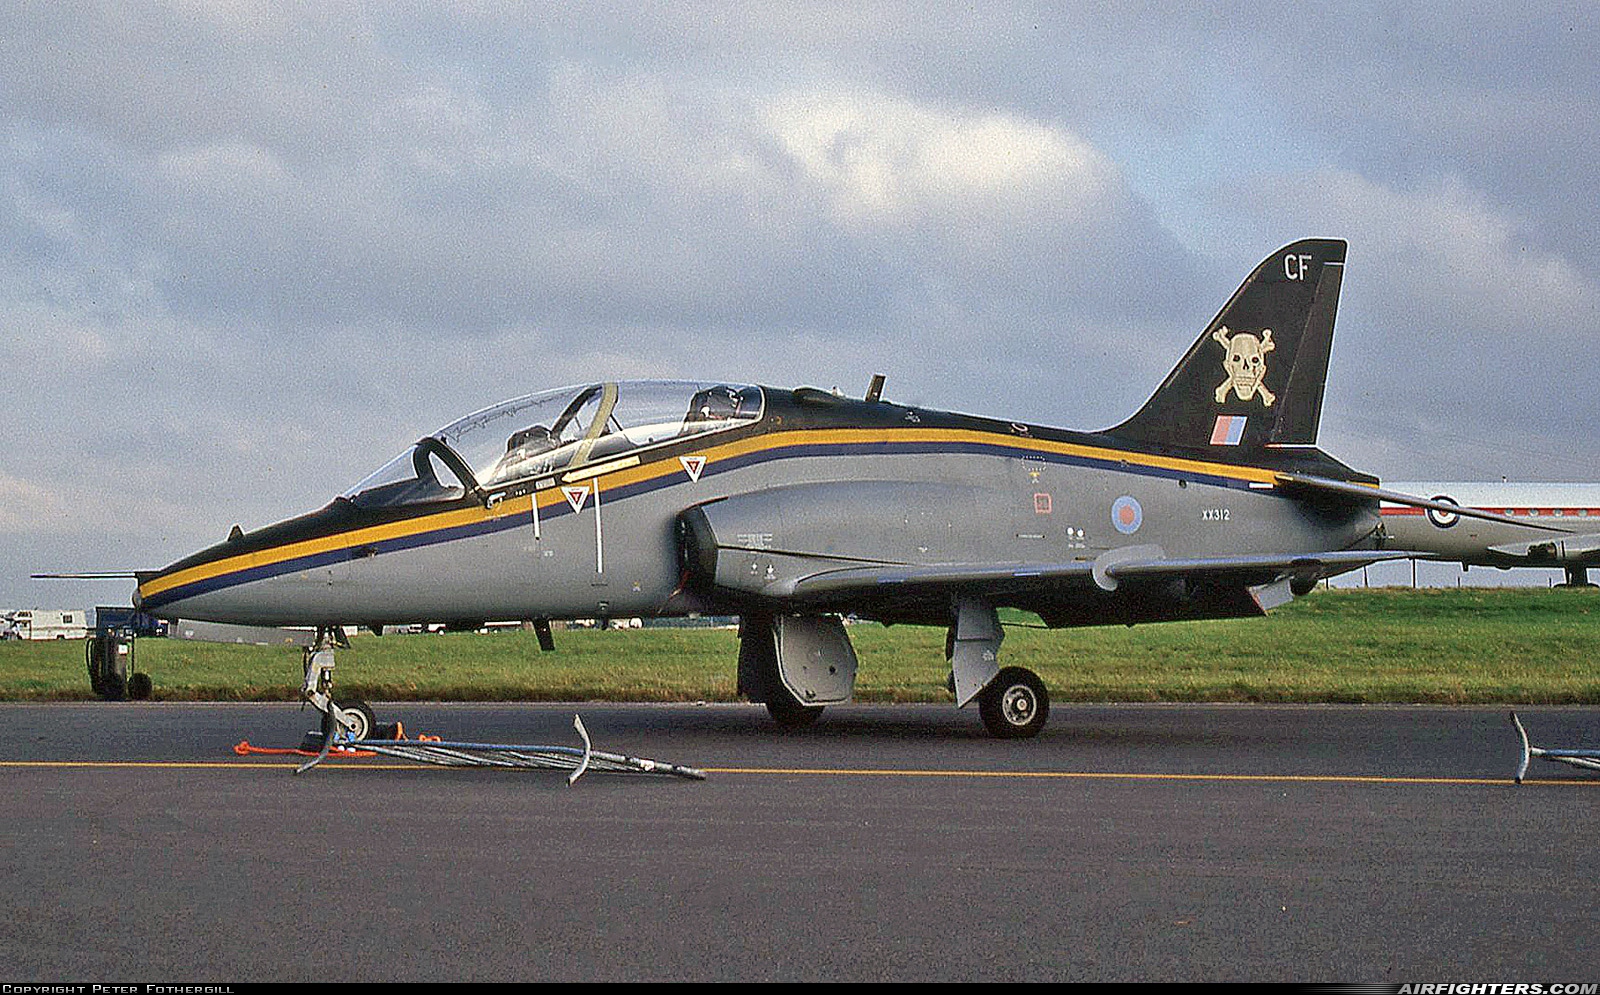 UK - Air Force British Aerospace Hawk T.1W XX312 at Fairford (FFD / EGVA), UK